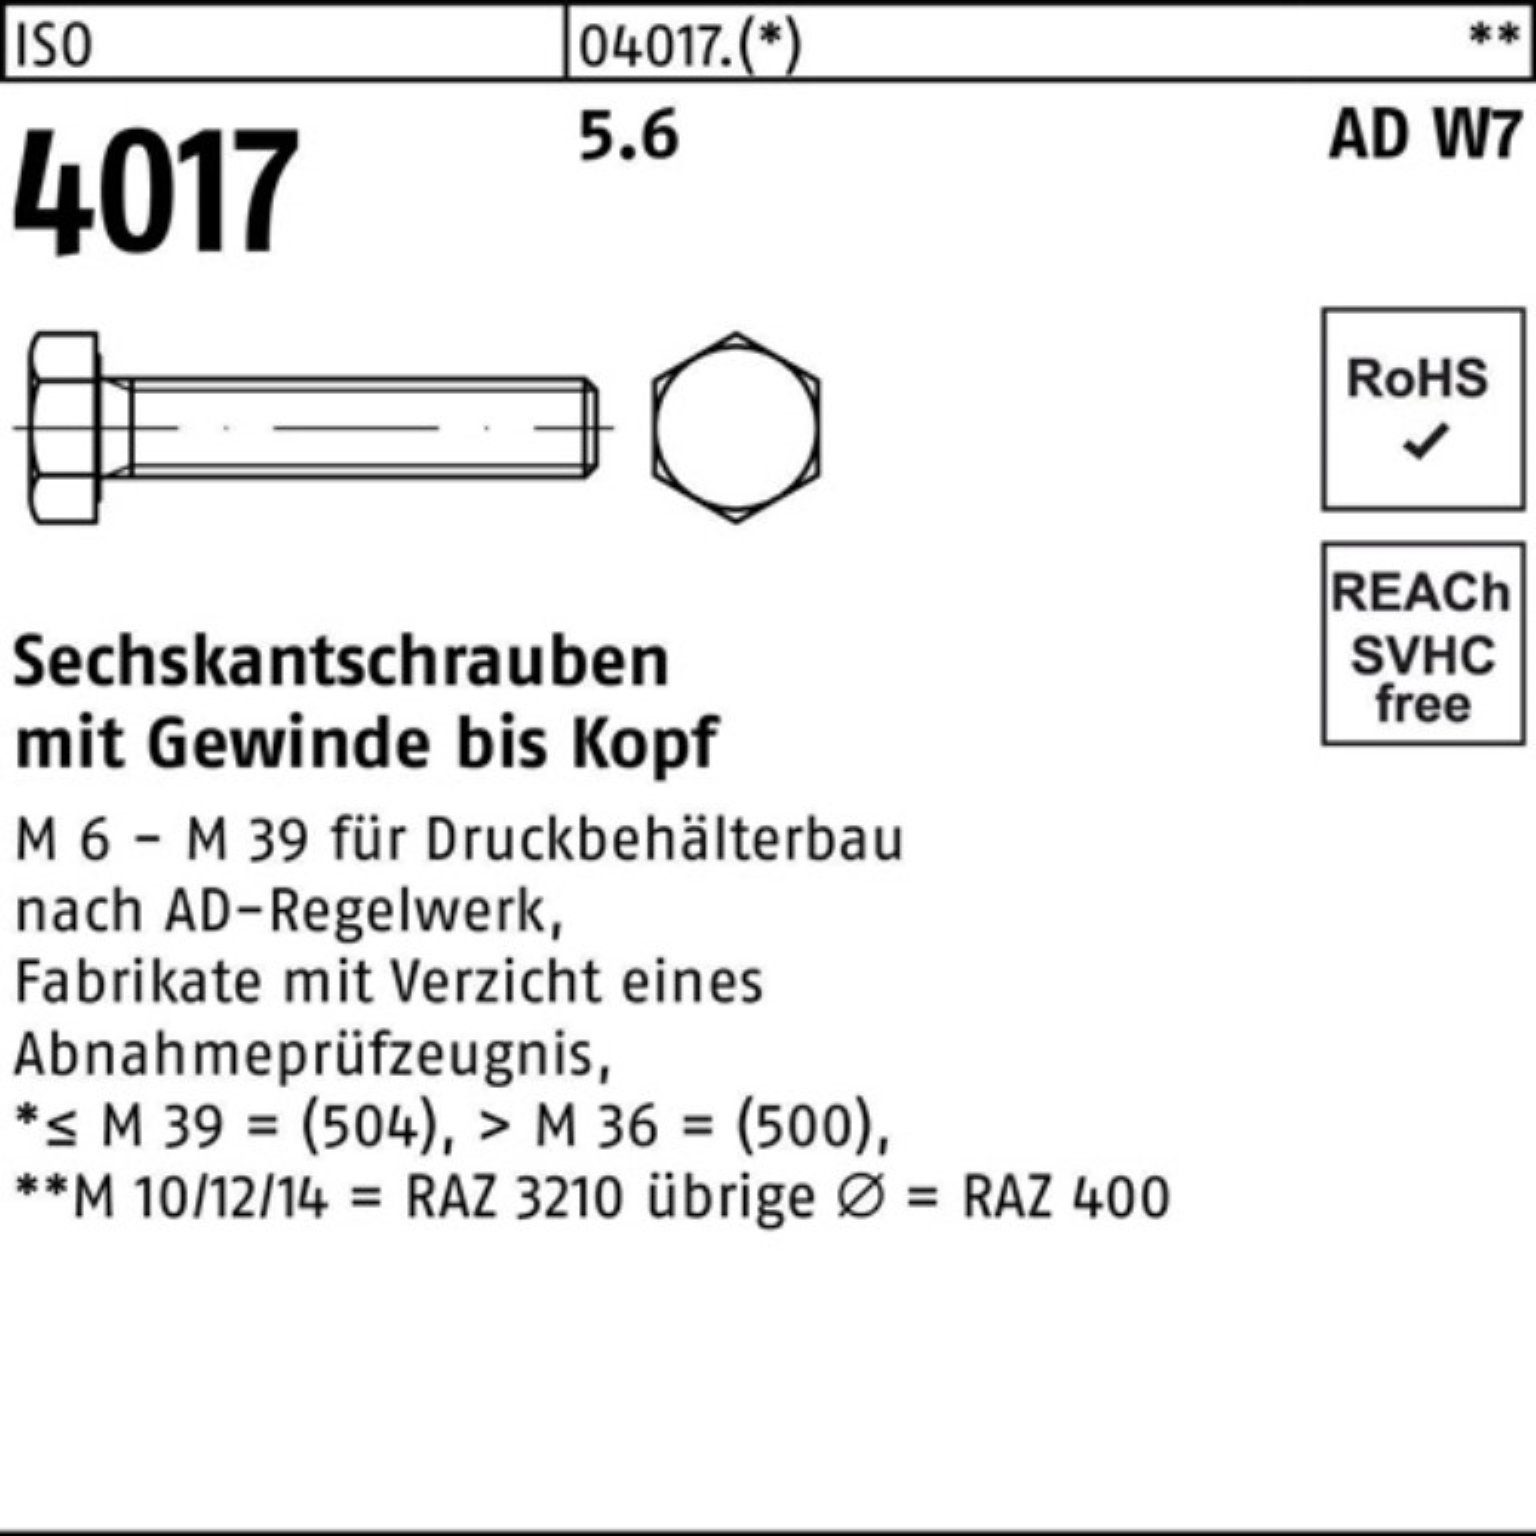 Bufab 1 65 Pack Sechskantschraube M30x 100er W7 5.6 ISO Sechskantschraube Stück VG IS 4017 AD